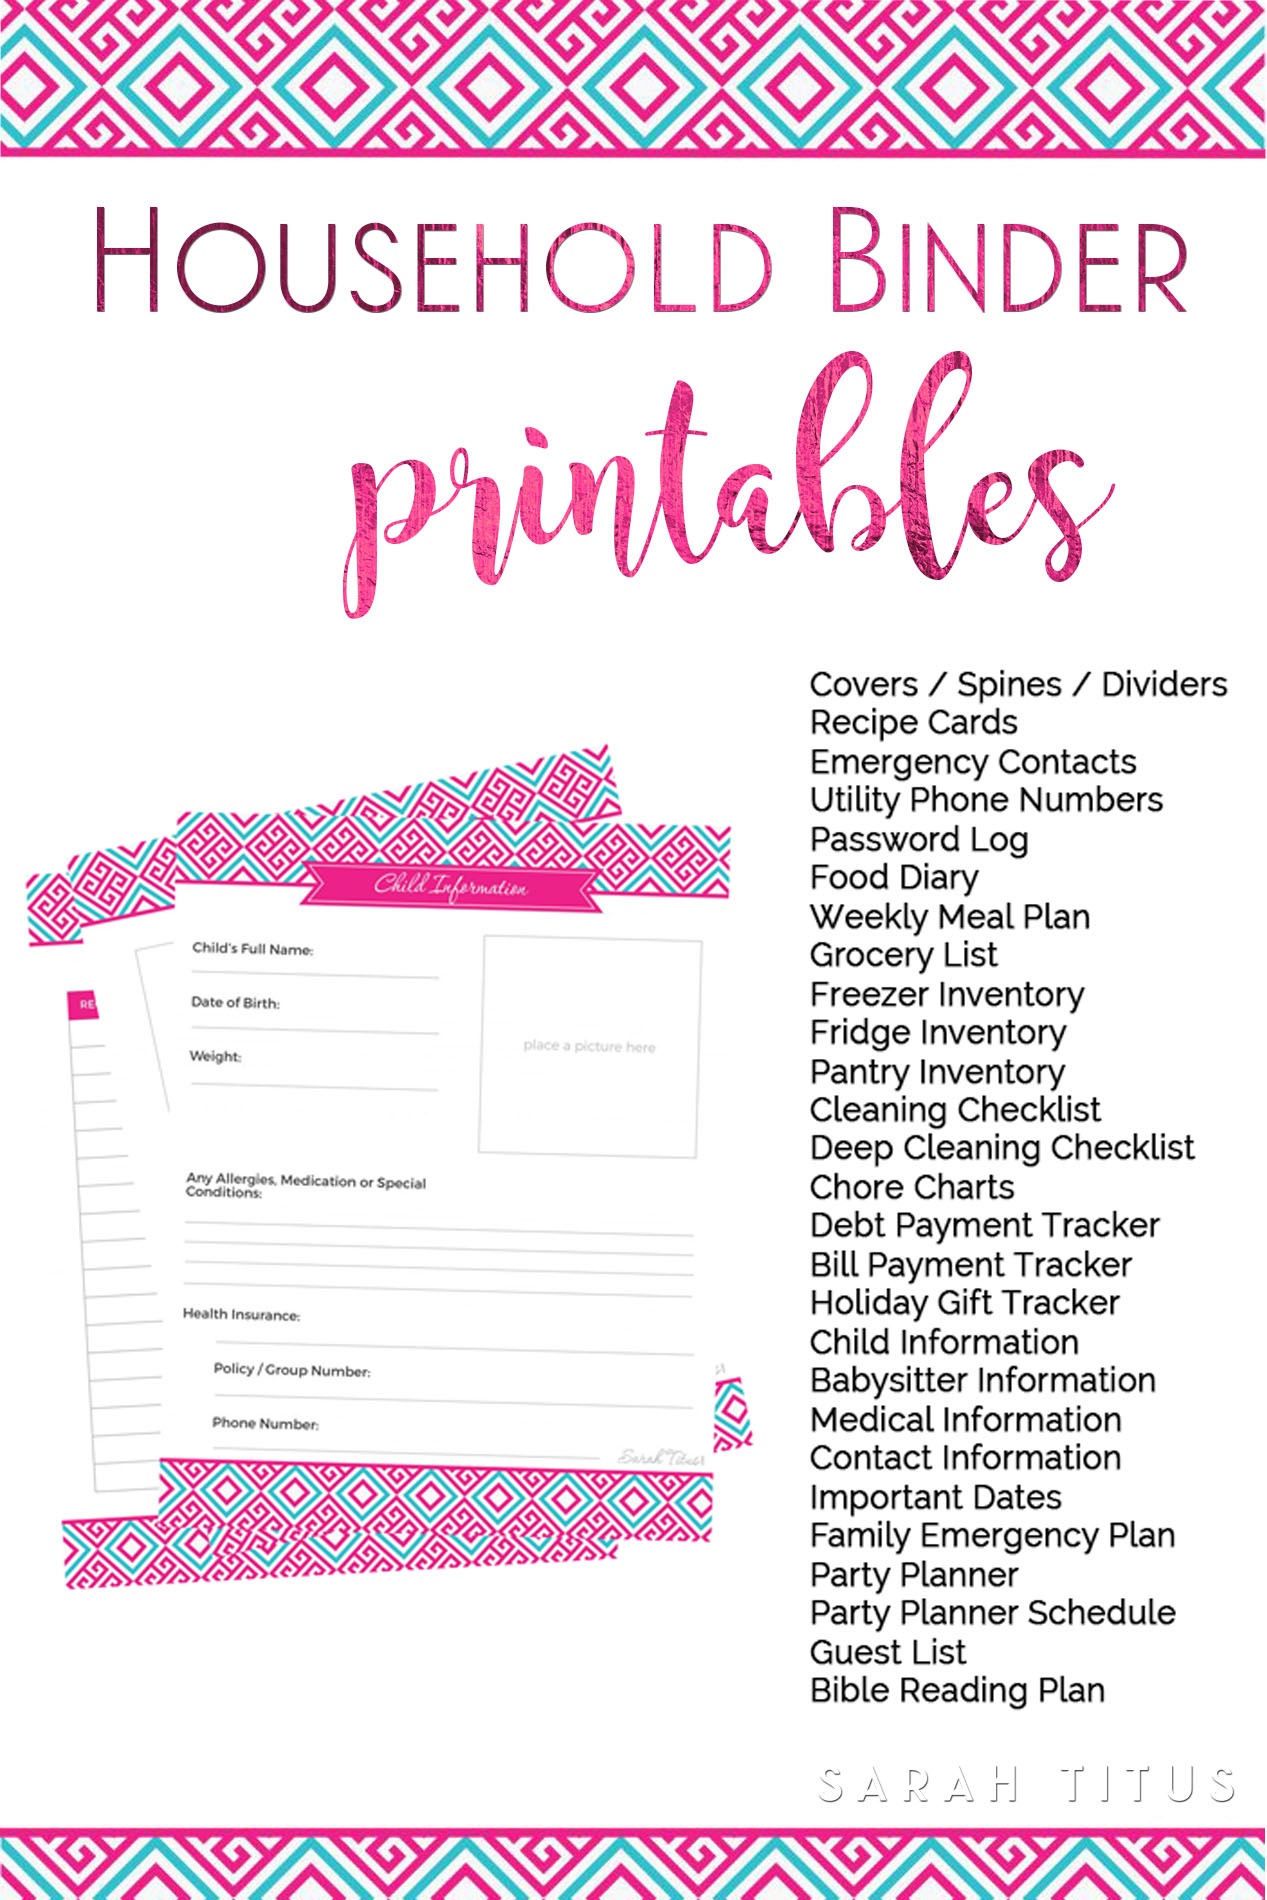 Household Binder Free Printables - Sarah Titus - Free Home Organization Printables